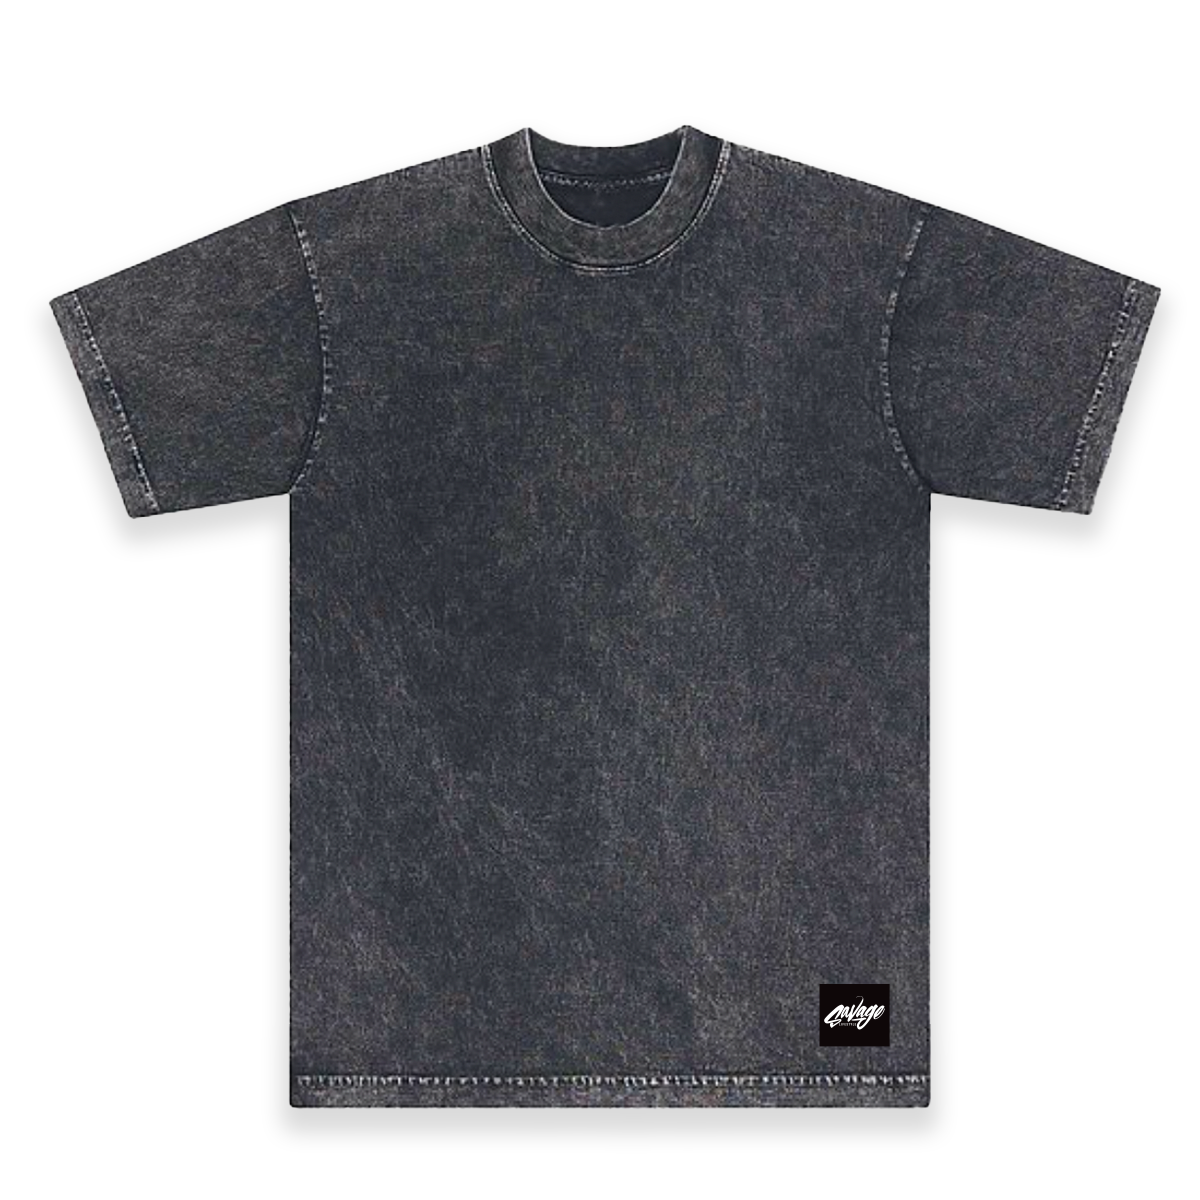 Savage Mineral Wash Crew Neck T Shirt in black - 6.5 oz